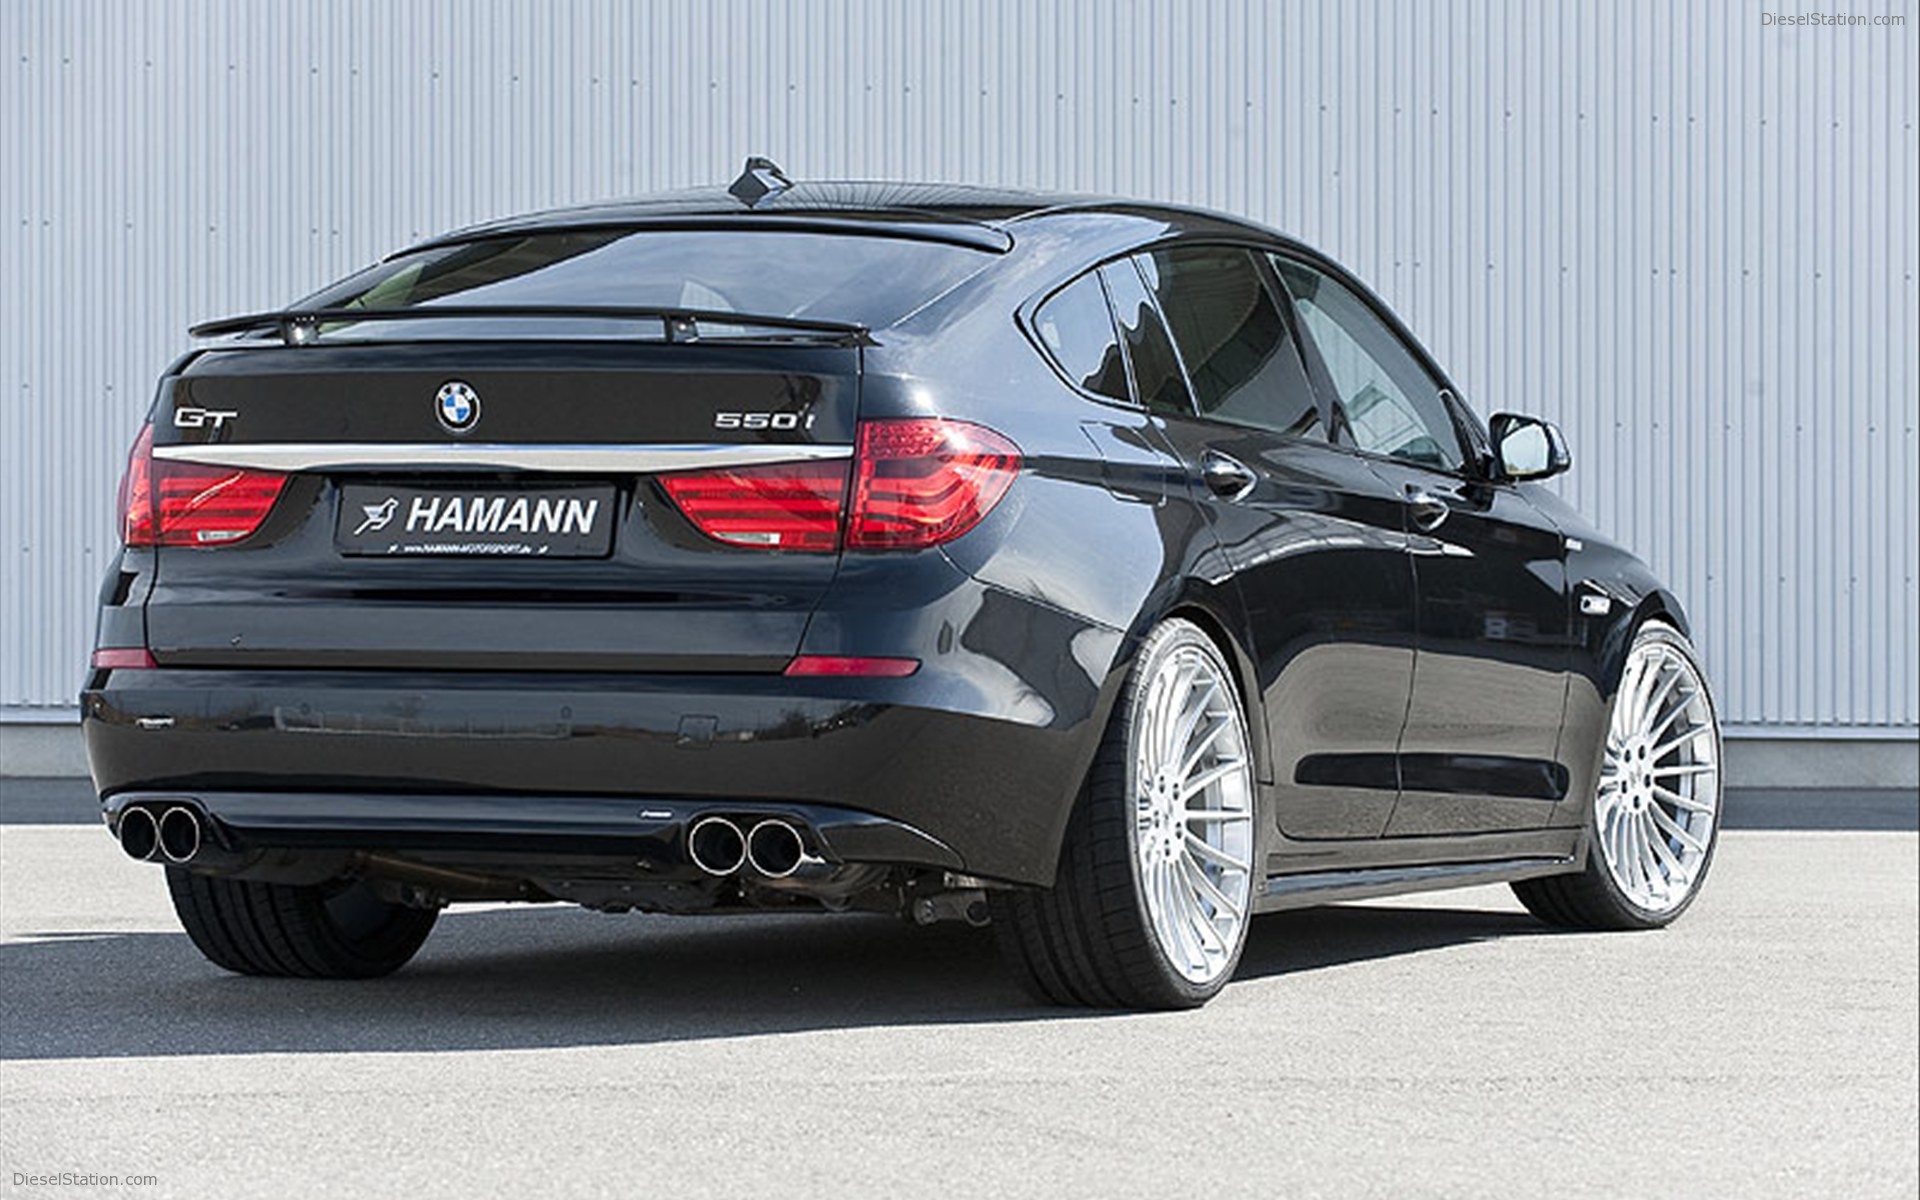 Hamann BMW Series 5 GT - Car Pictures at Dieselstation